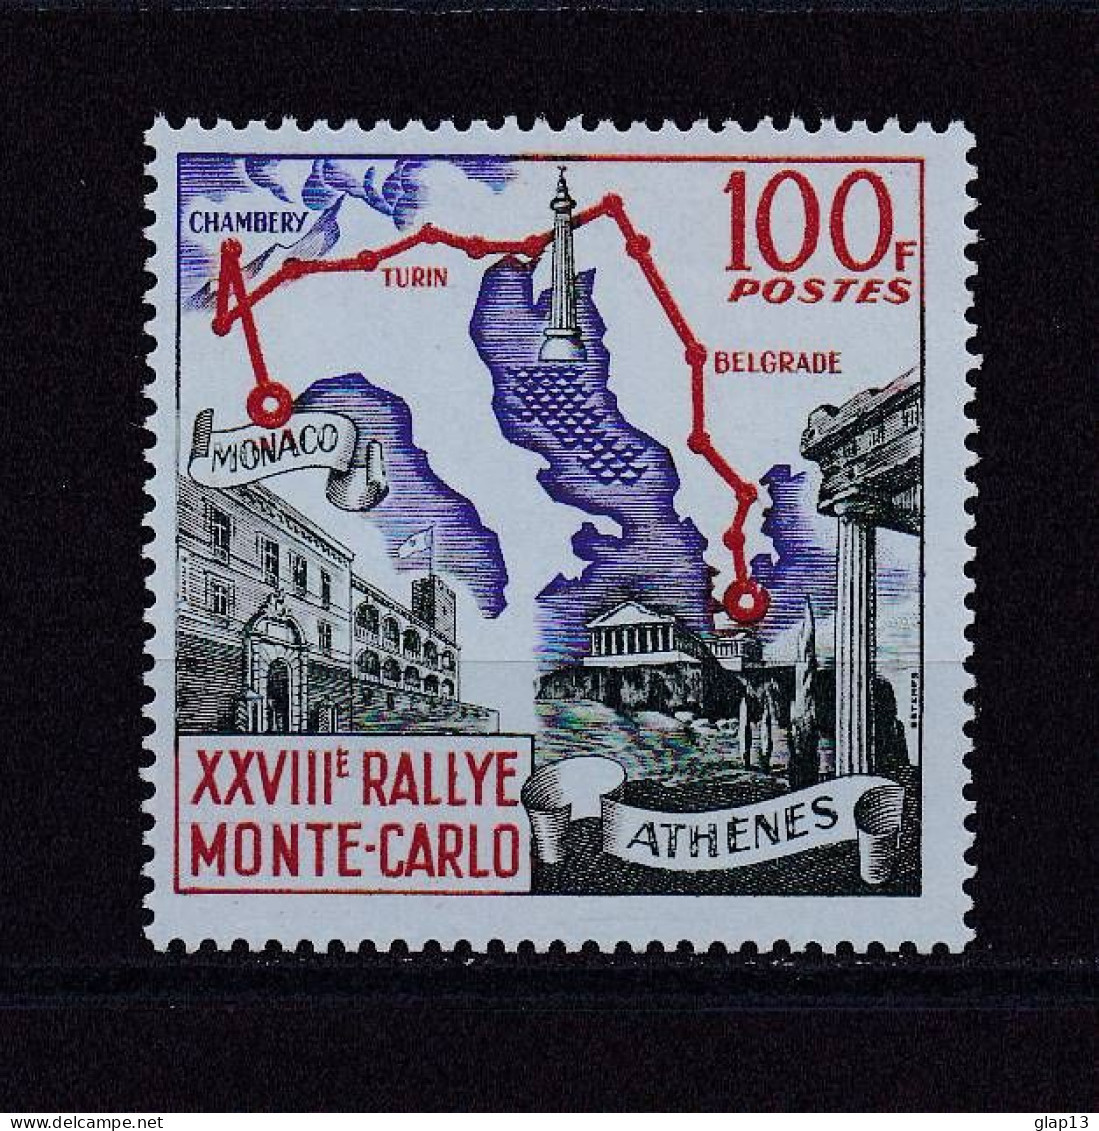 MONACO 1959 TIMBRE N°510 NEUF** RALLYE - Unused Stamps